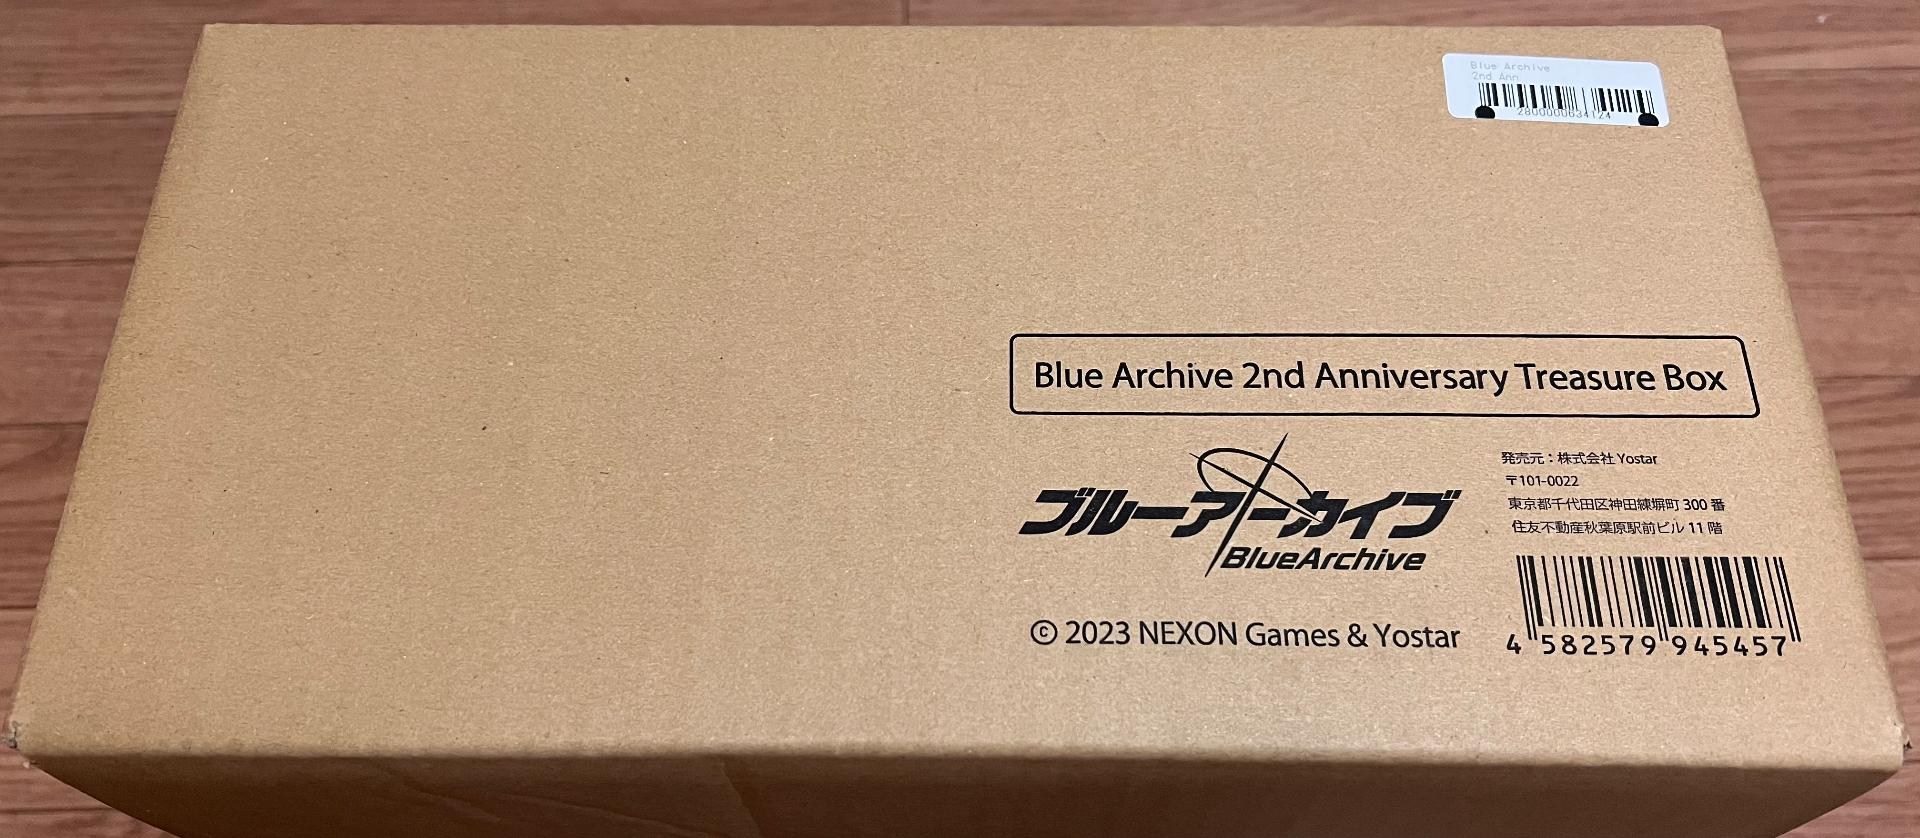 Blue Archive 2nd Anniversary TreasureBox-